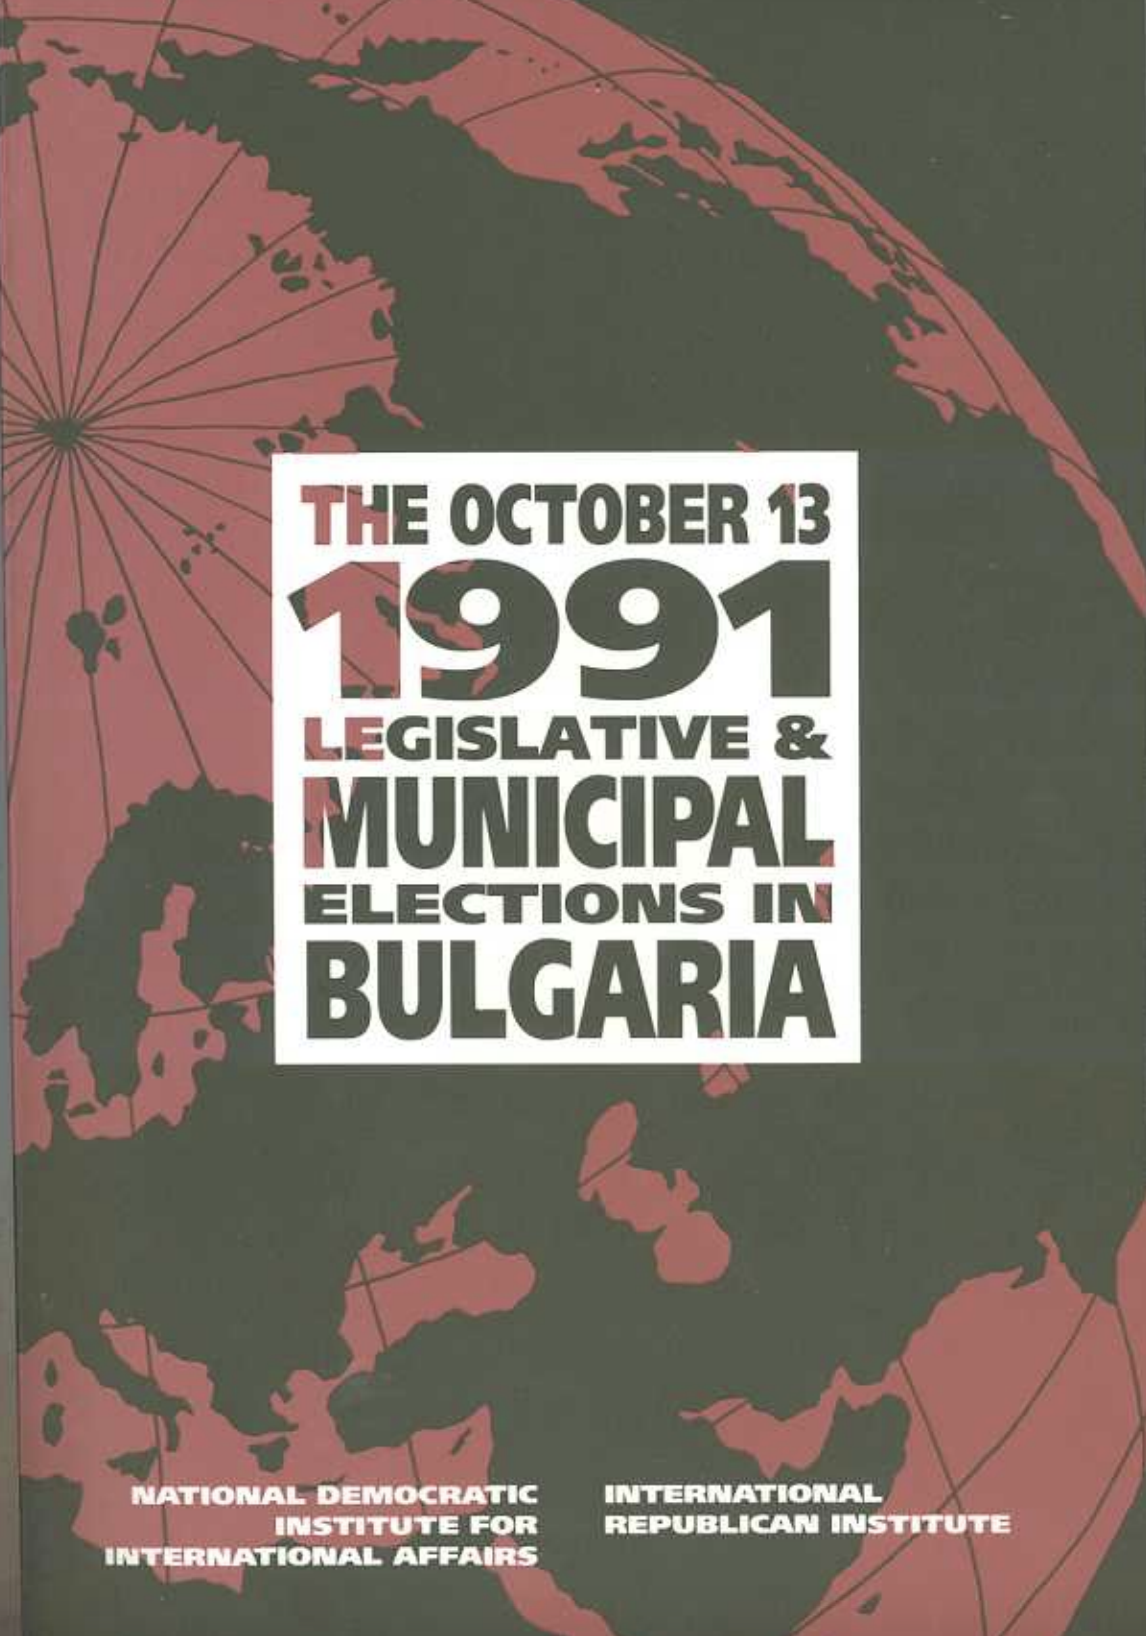 The Oct 13, 1991 Legislative and Municipal Elections in Bulgaria